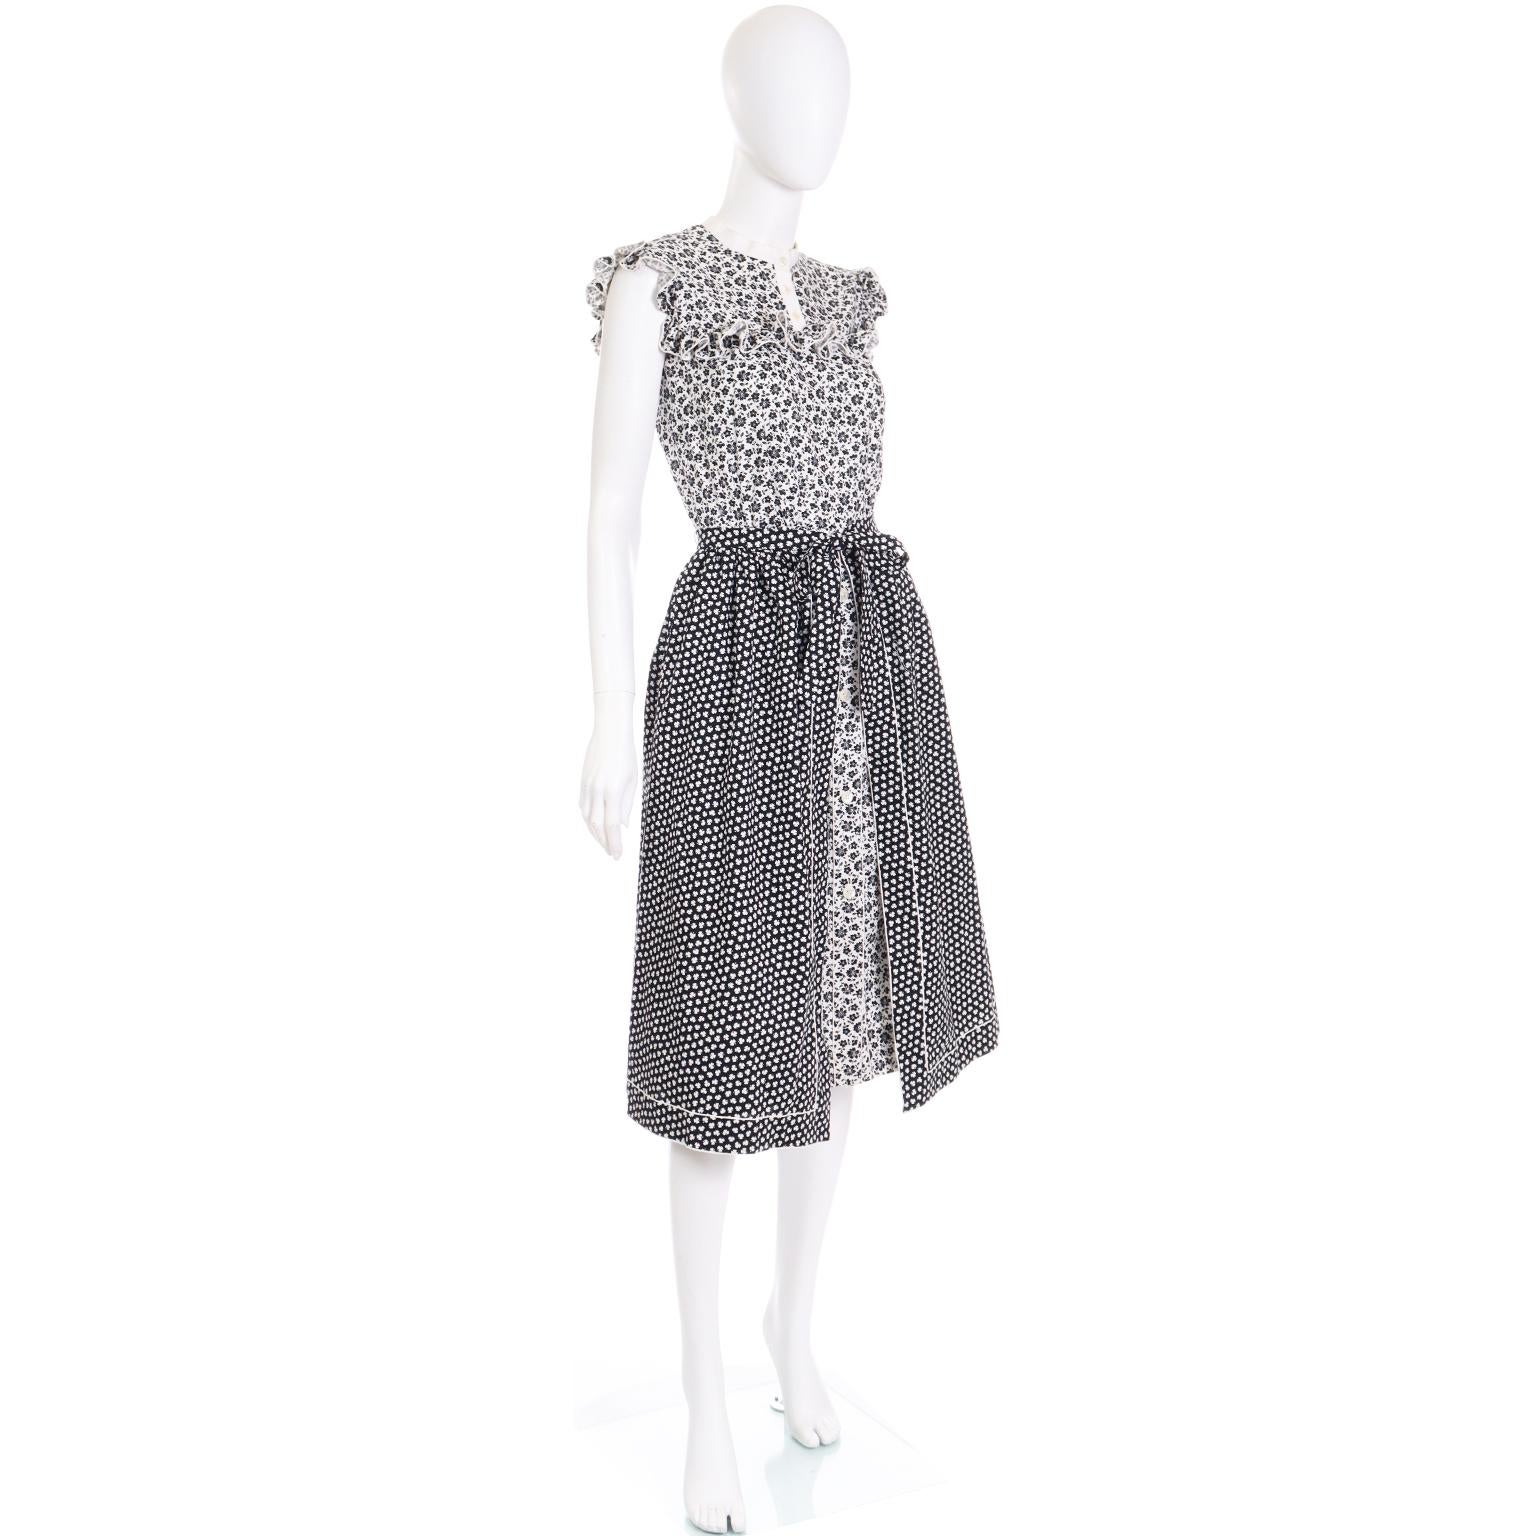 1970s Vintage Blue & White Floral Prairie Cotton Ruffled Dress & Apron Skirt 1